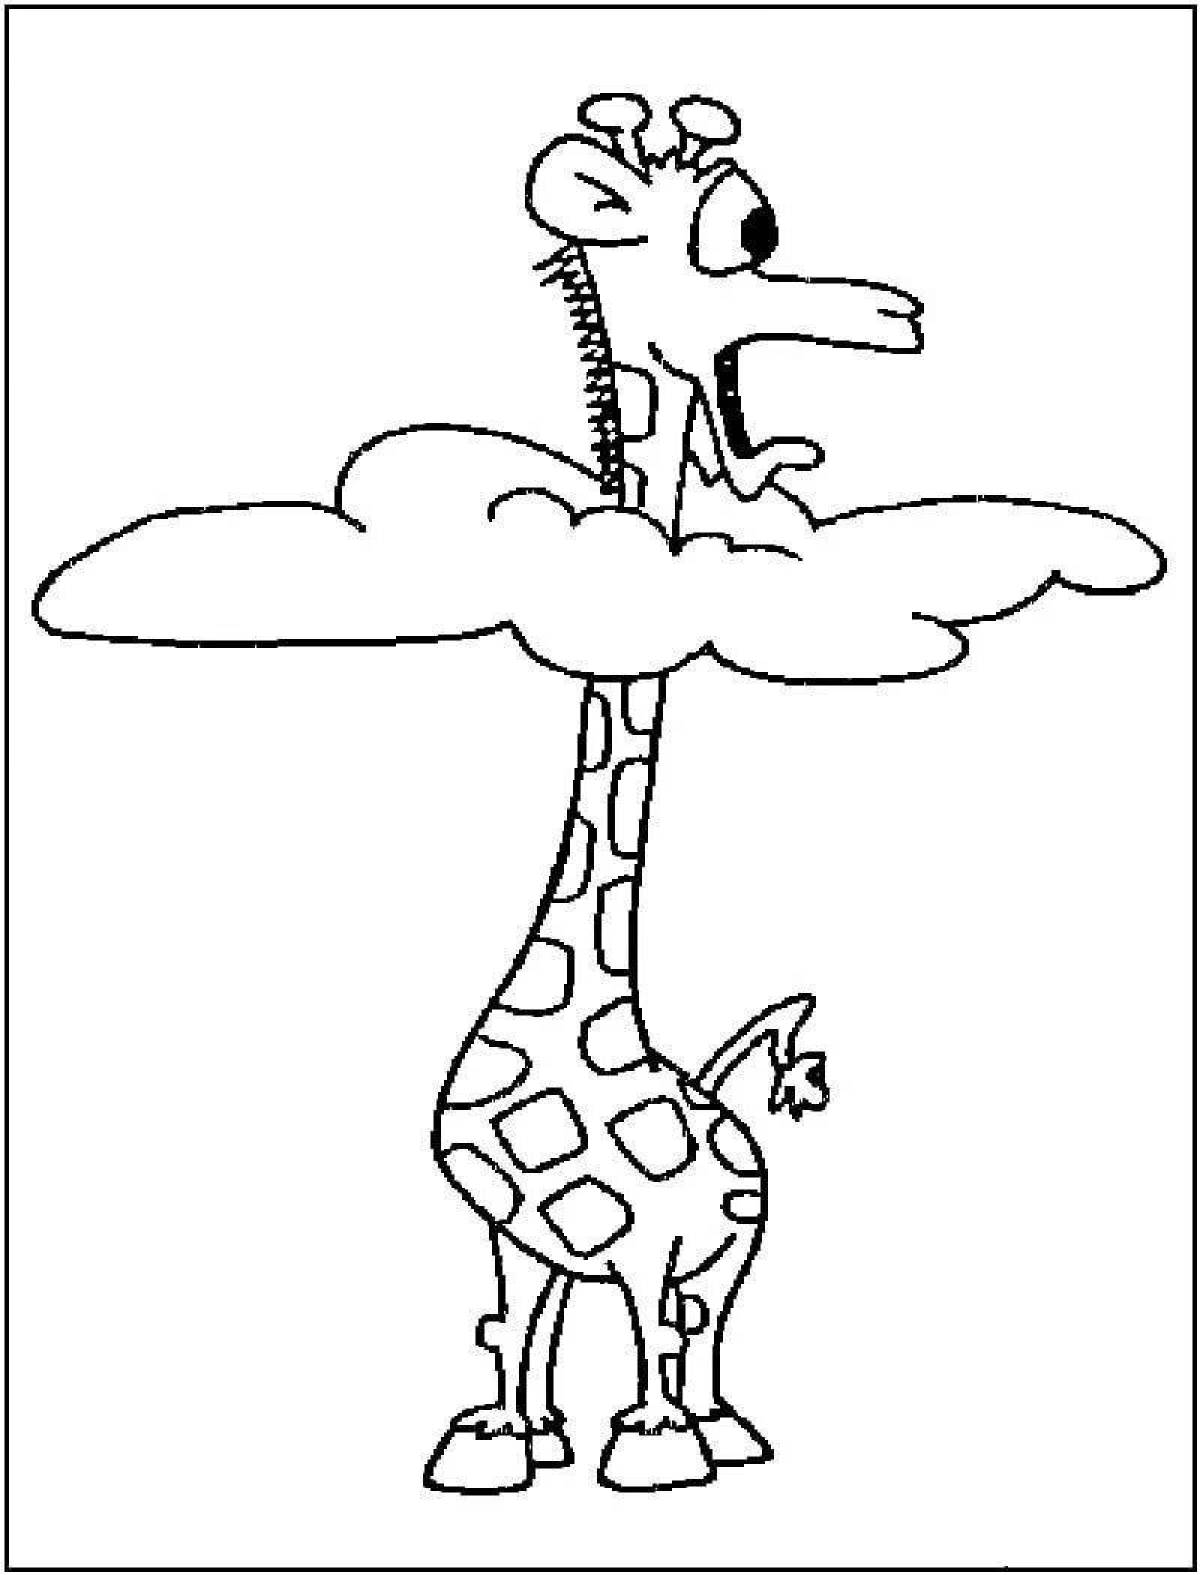 На рисунке изображен жираф. Жираф. Раскраска. Жираф раскраска для детей. Раскраска жирафа для детей. Жирафик раскраска для детей.